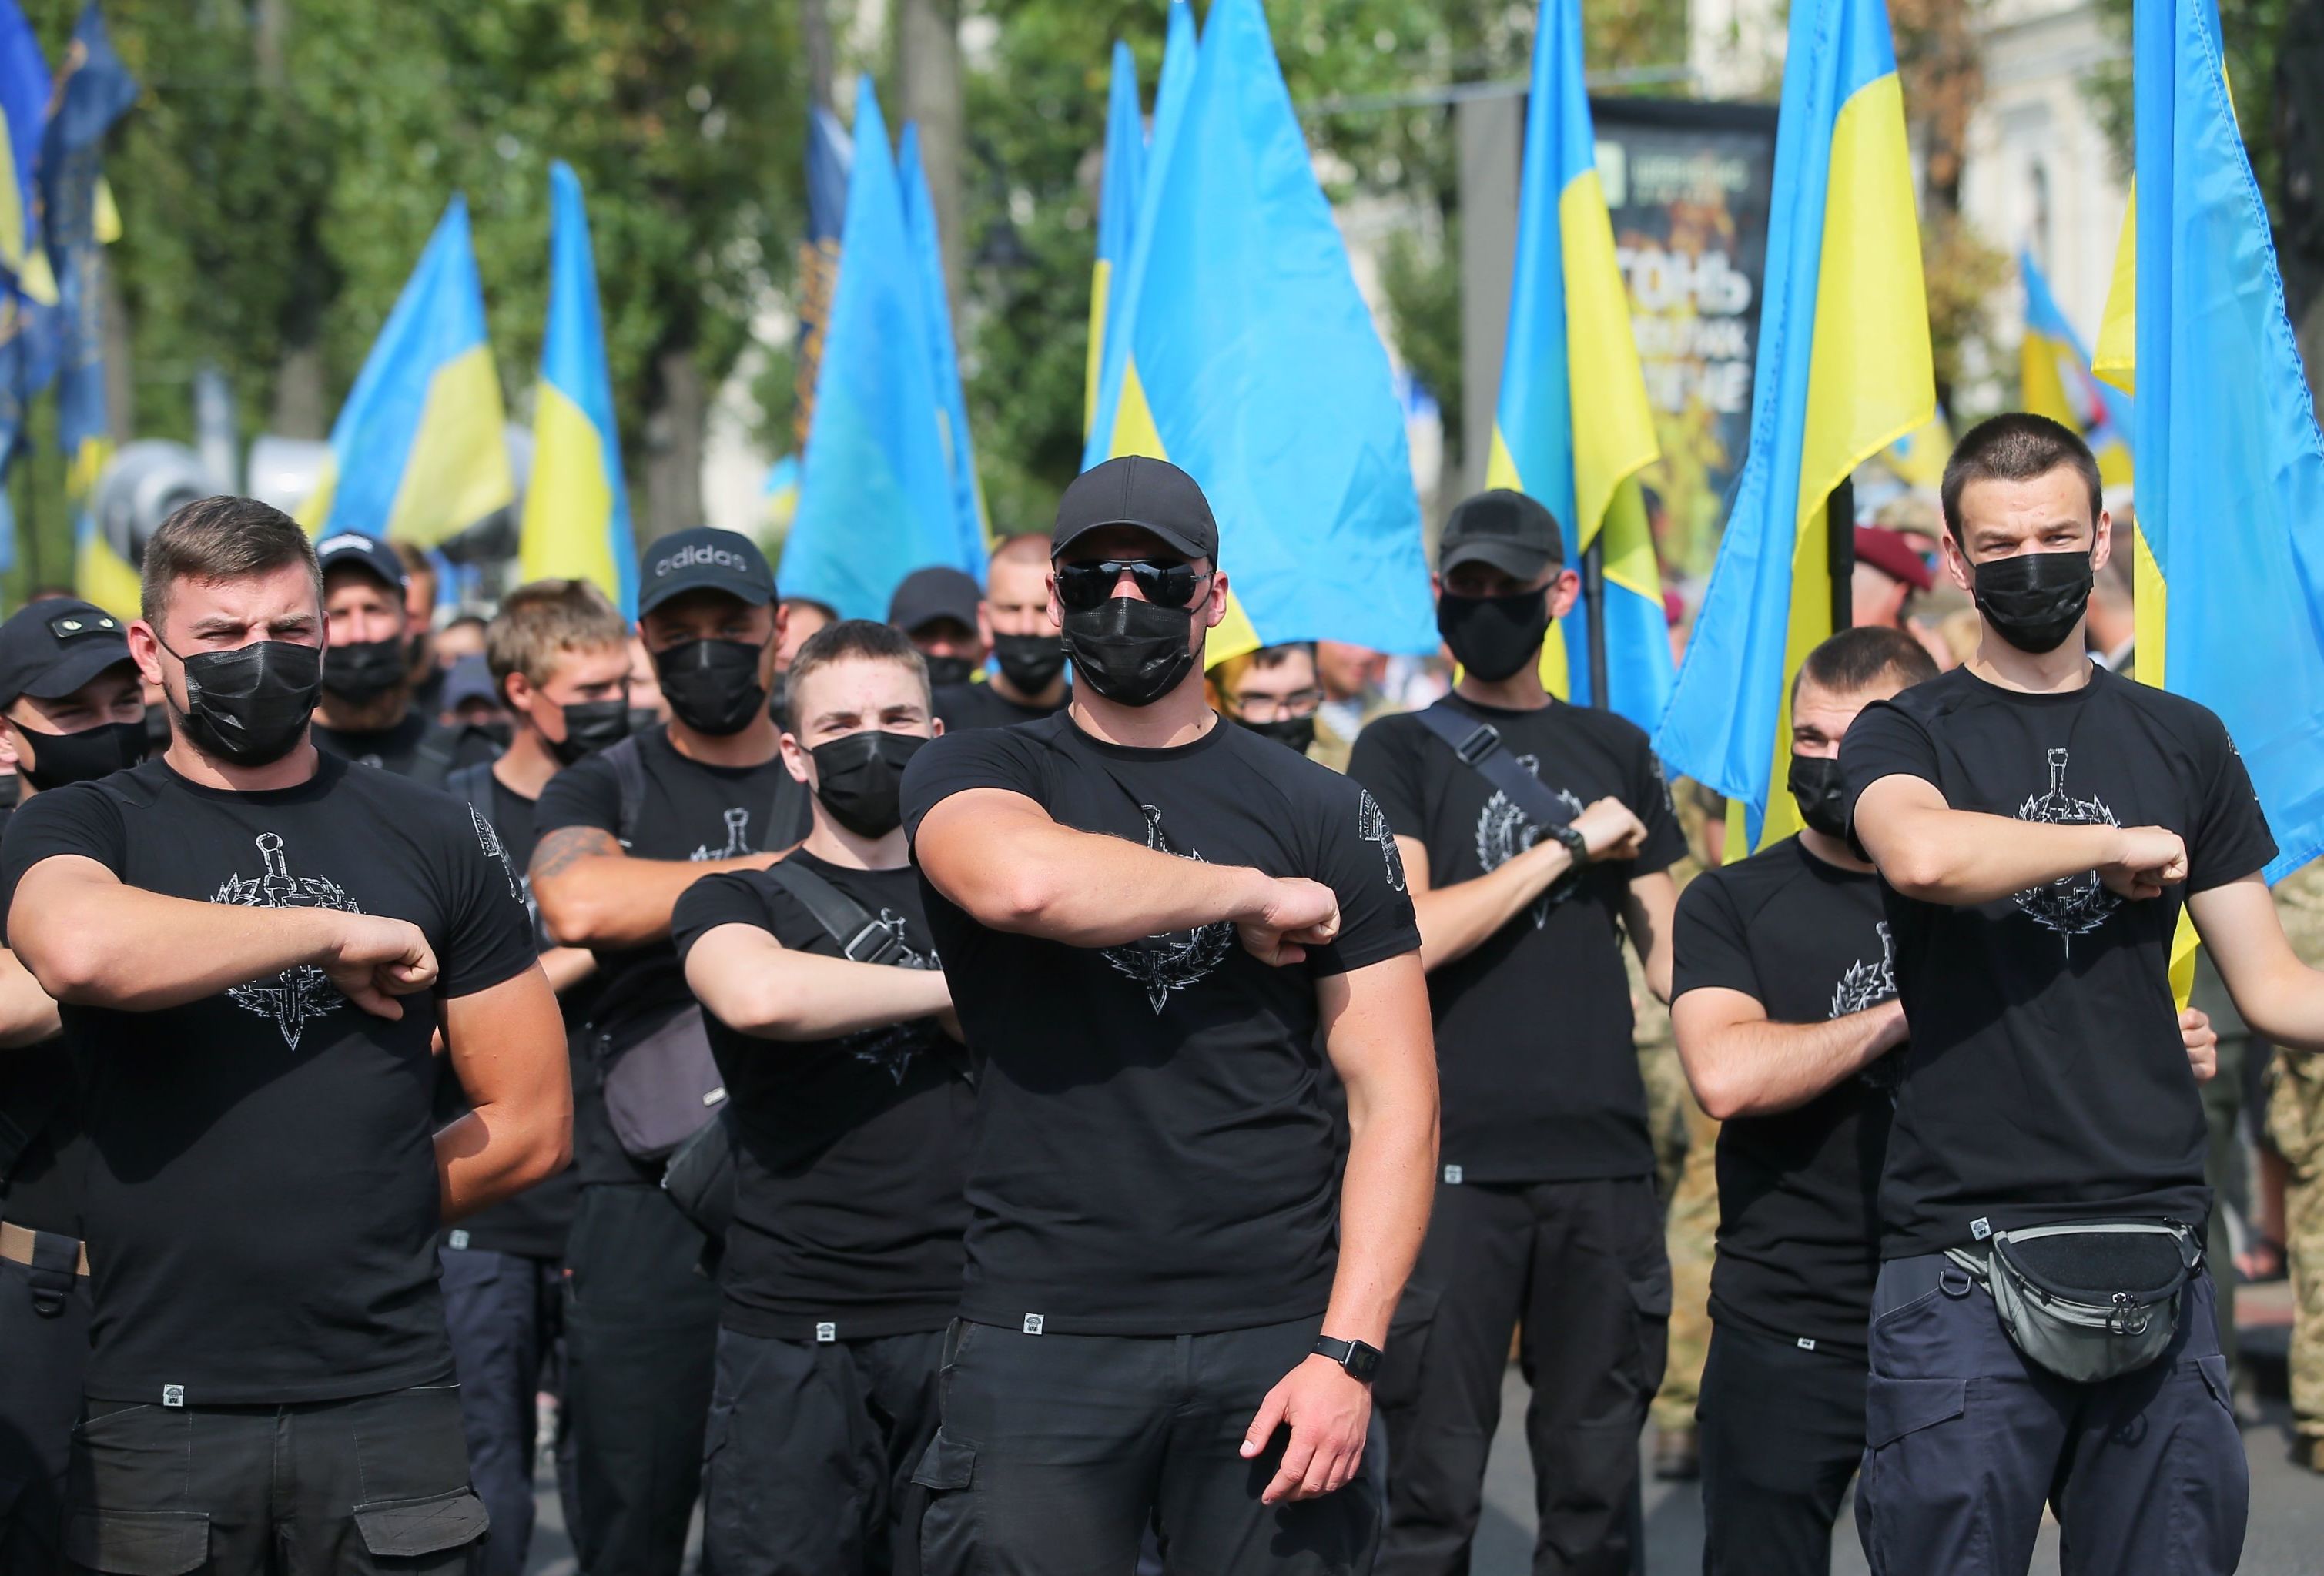 "Марш защитников" в Киеве, 24 августа 2020